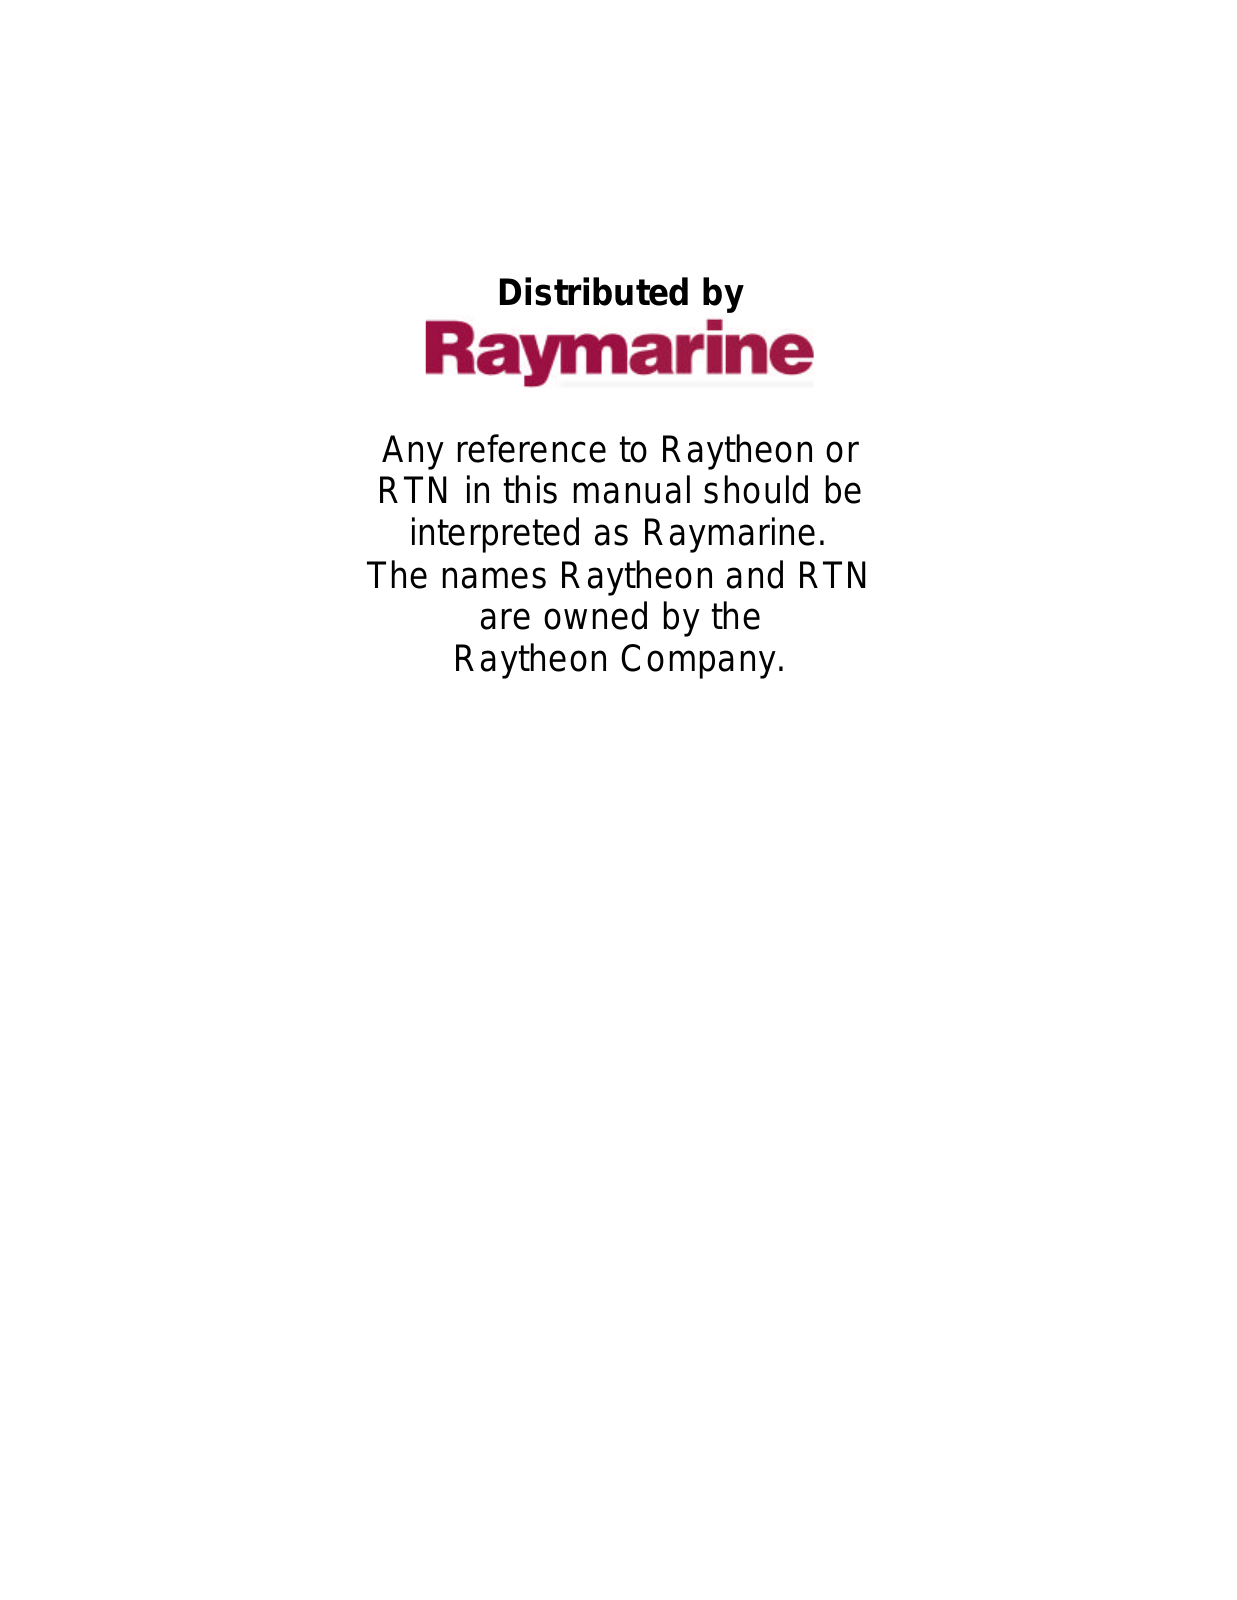 Raymarine APELCO 5160 Manual